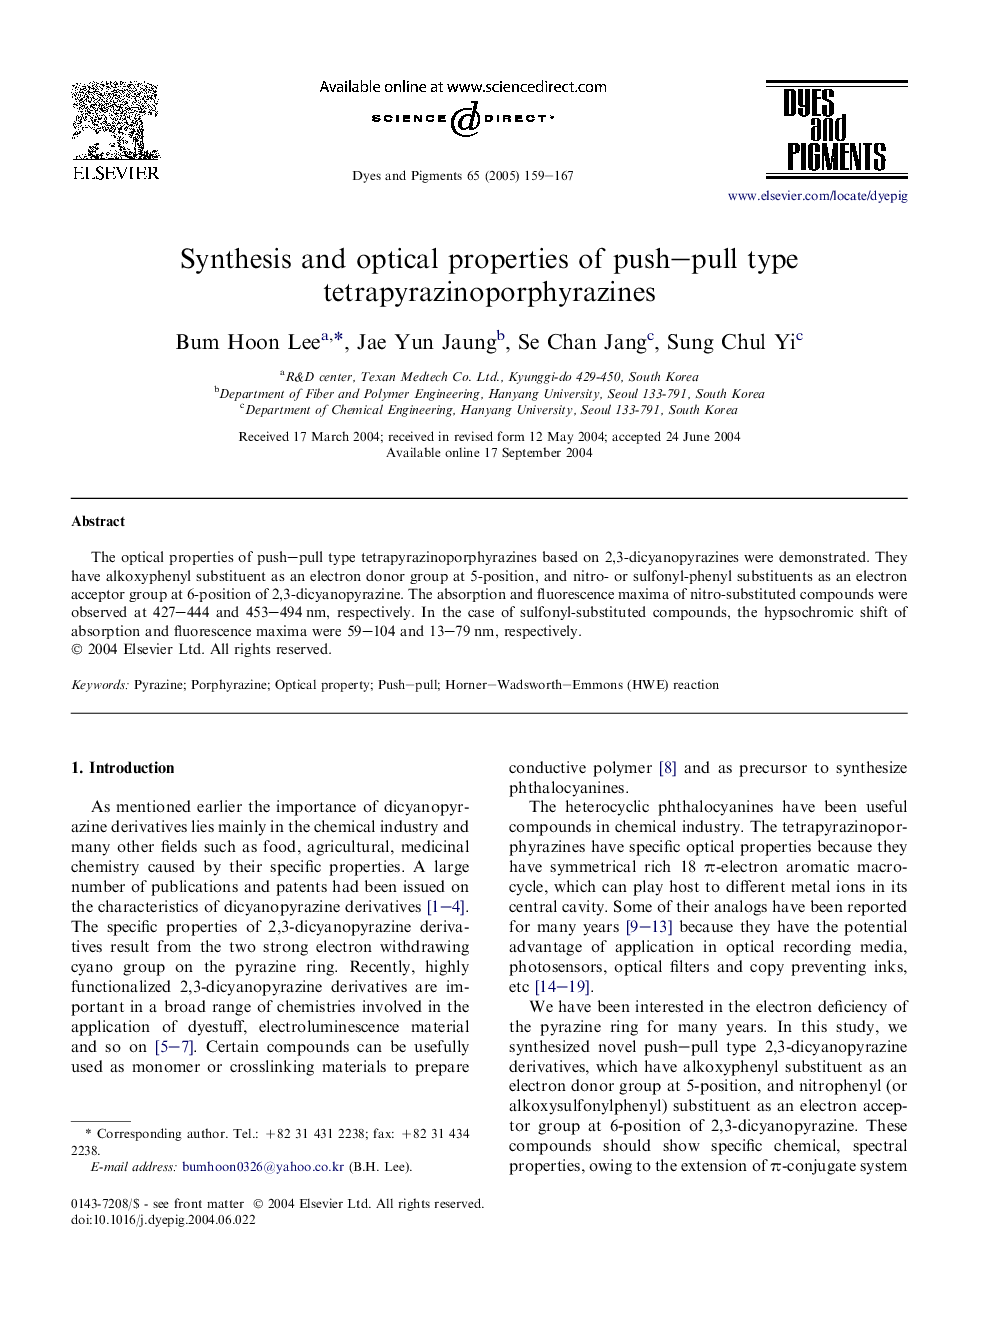 Synthesis and optical properties of push-pull type tetrapyrazinoporphyrazines